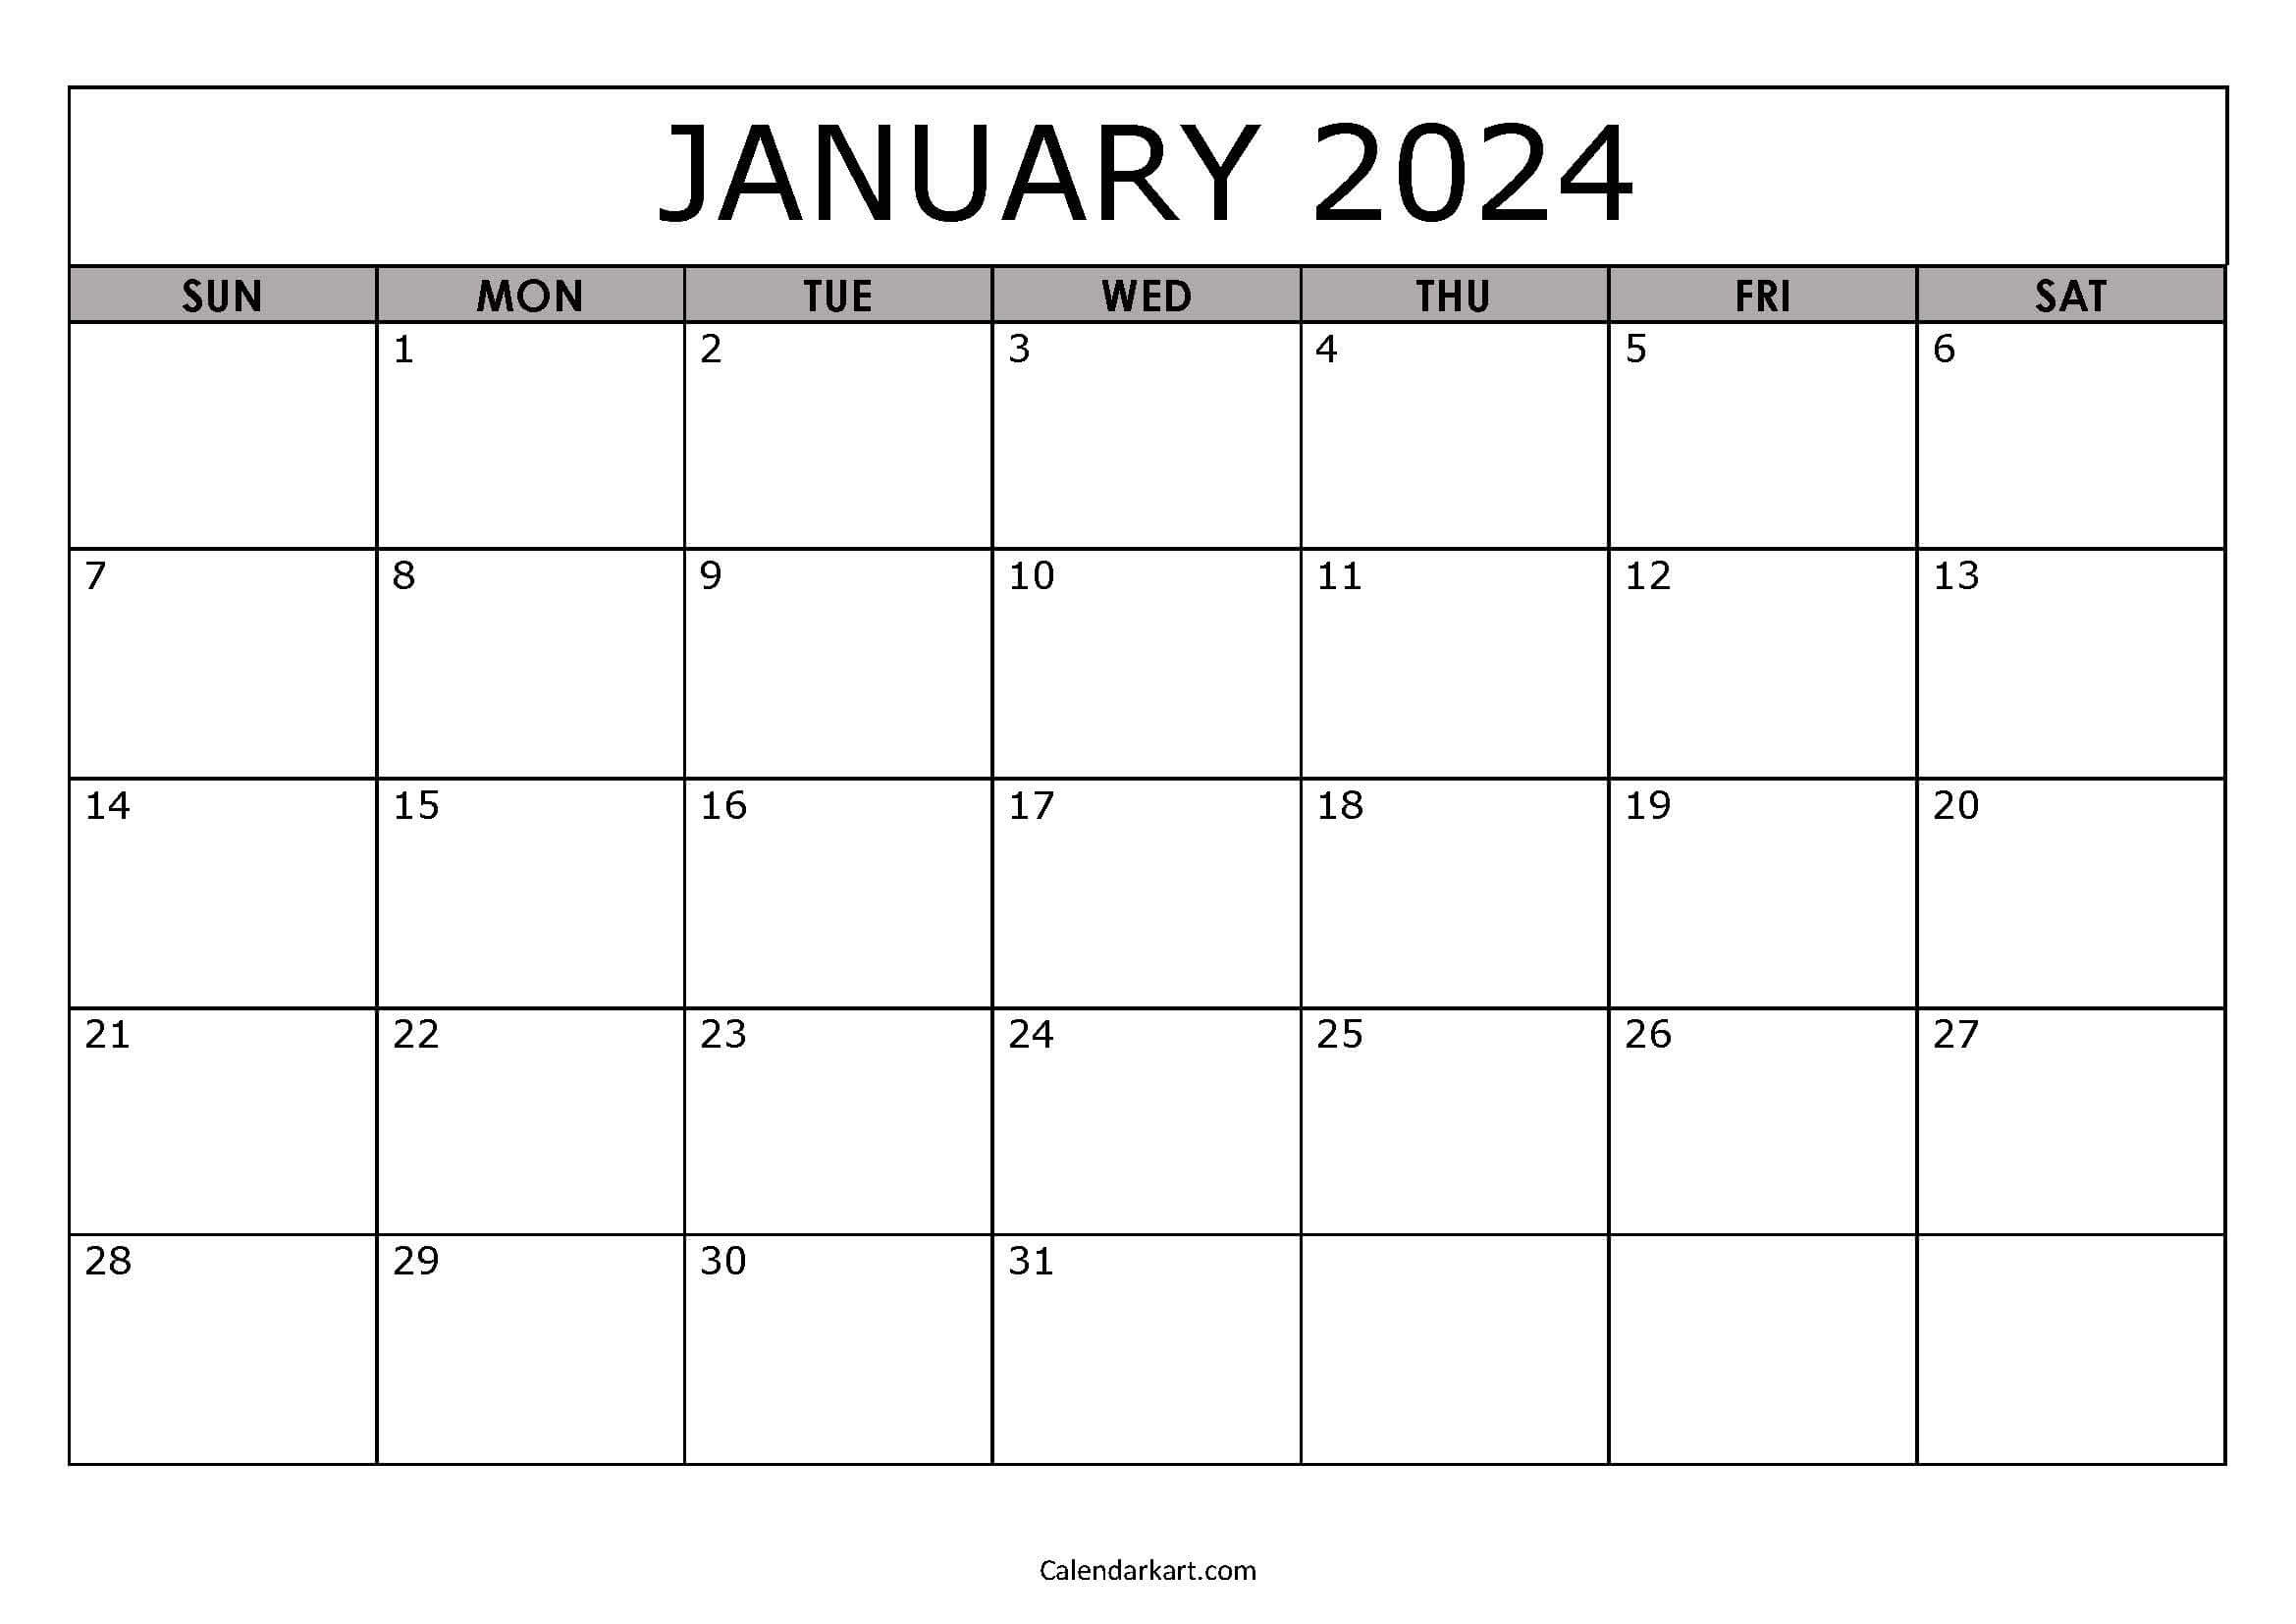 Free Printable January 2024 Calendars - Calendarkart within Free Printable Calendar 2024 Big Boxes